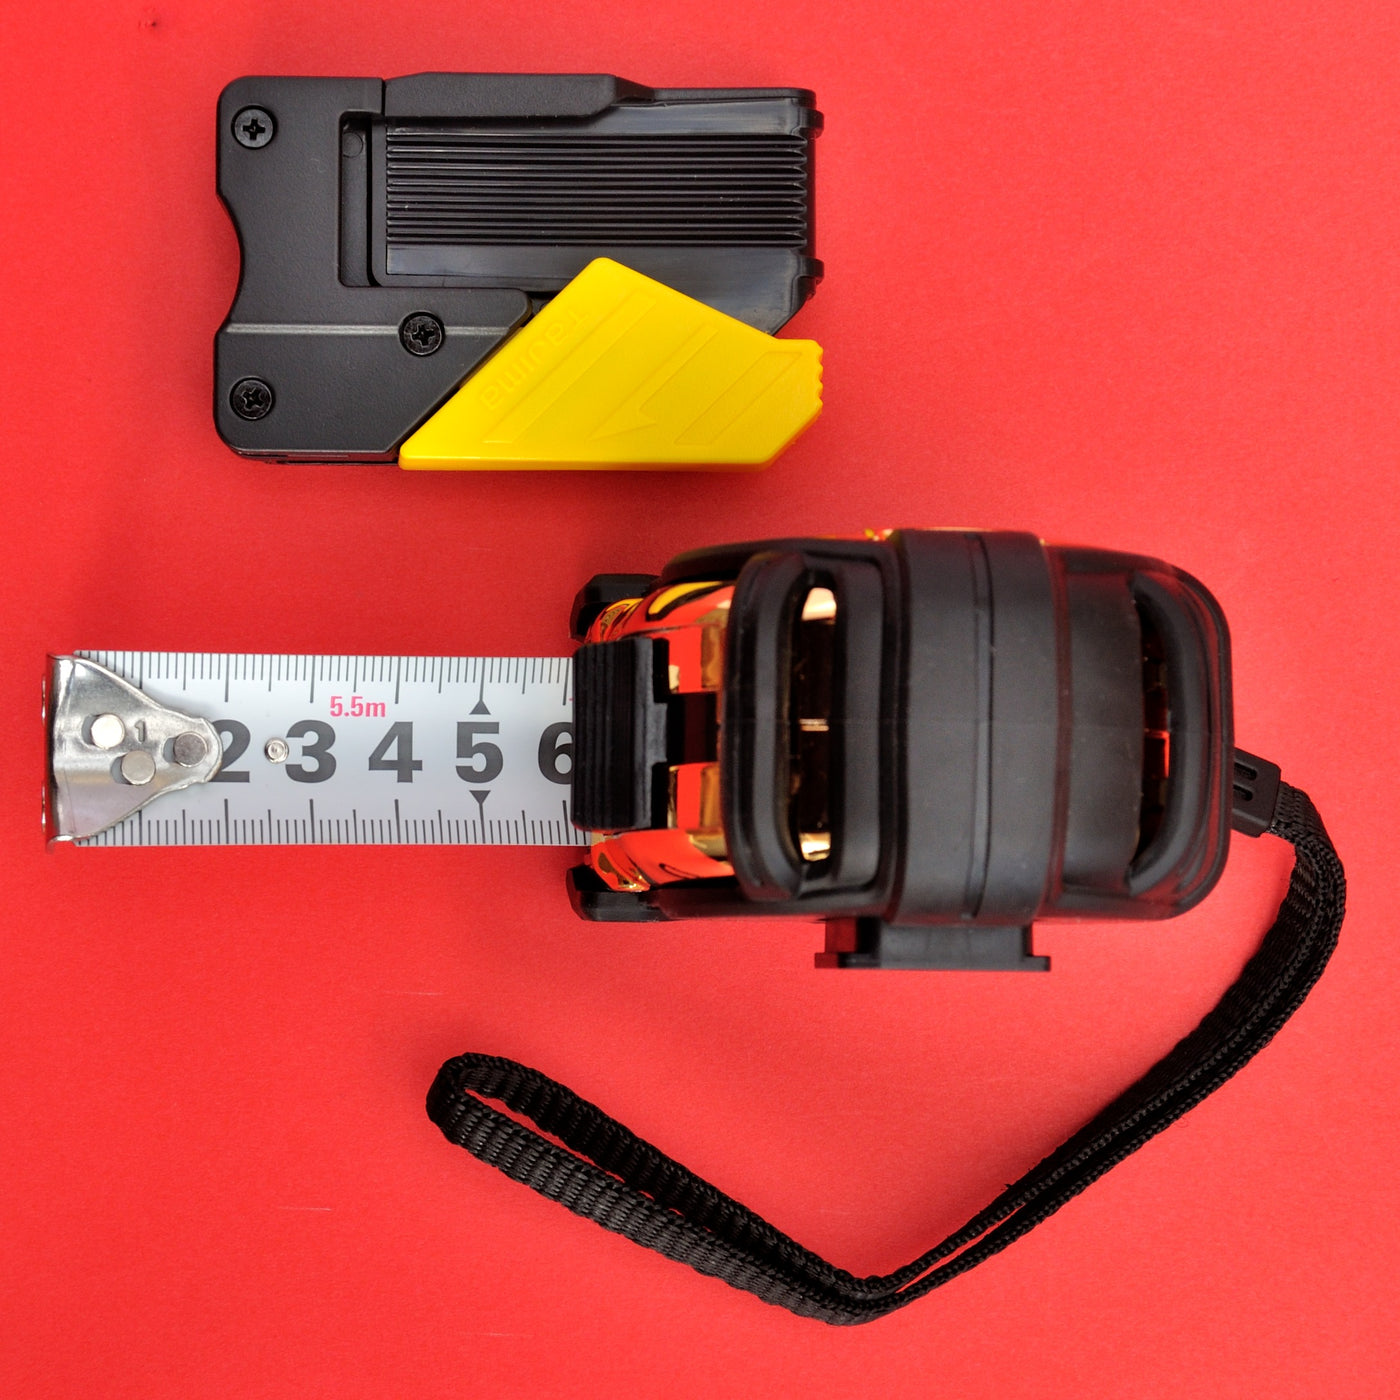 TAJIMA GOLD MAG 25 measuring tape 5.5m with magnets SFG3GLM25-55BL - Osaka  Tools